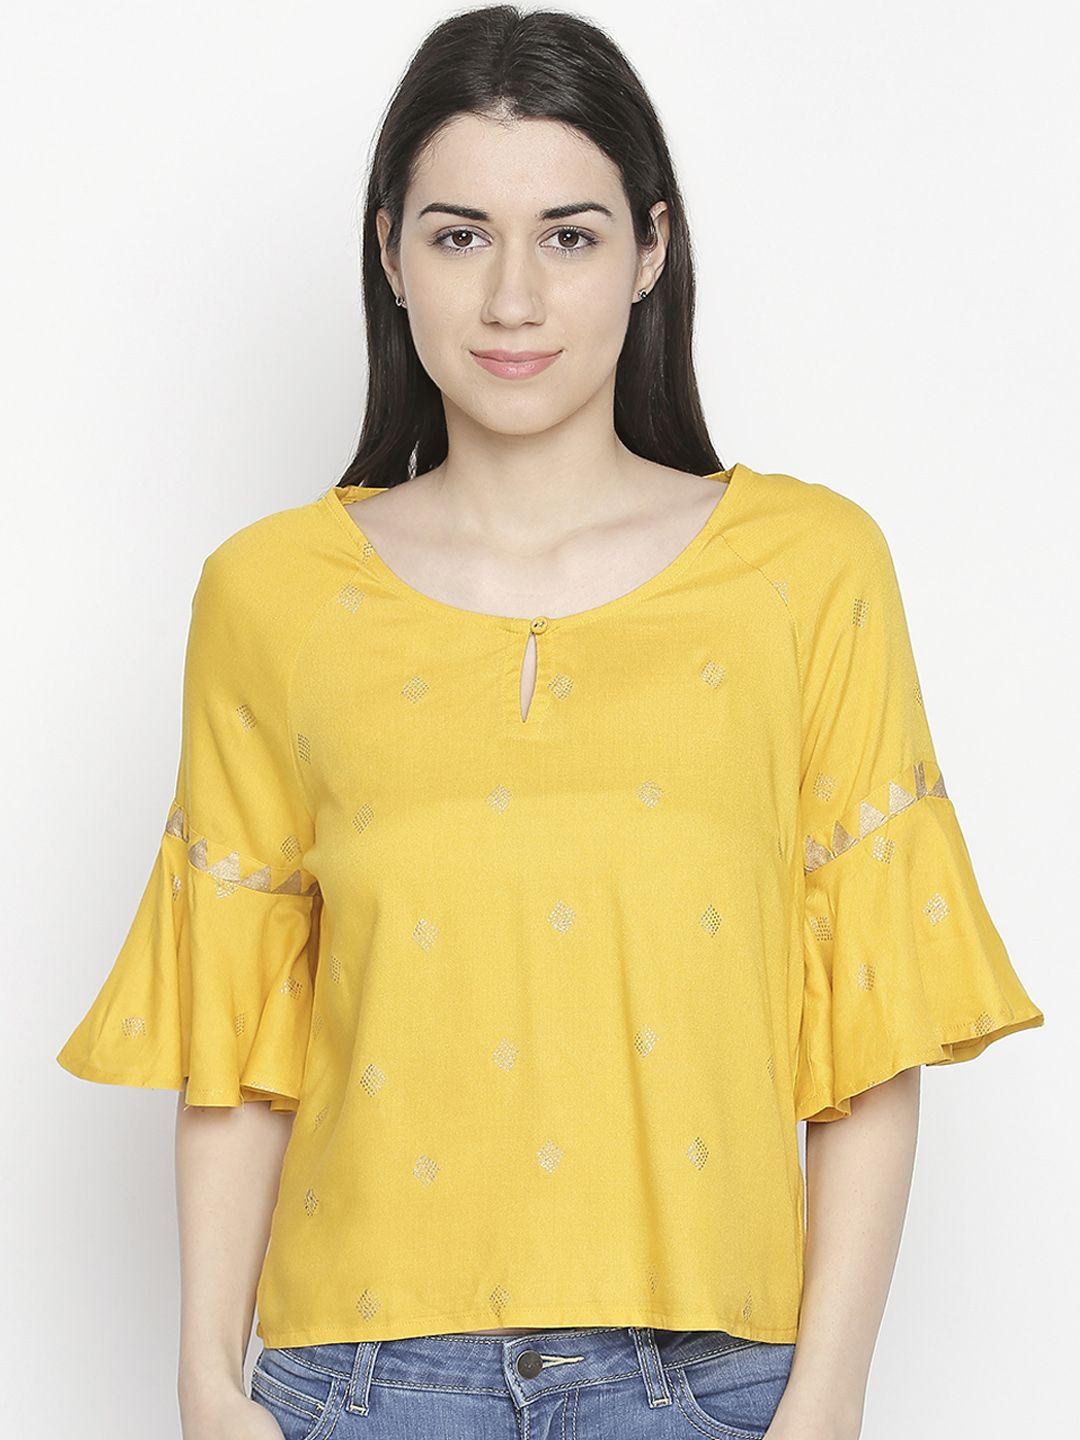 akkriti-by-pantaloons-women-yellow-printed-top